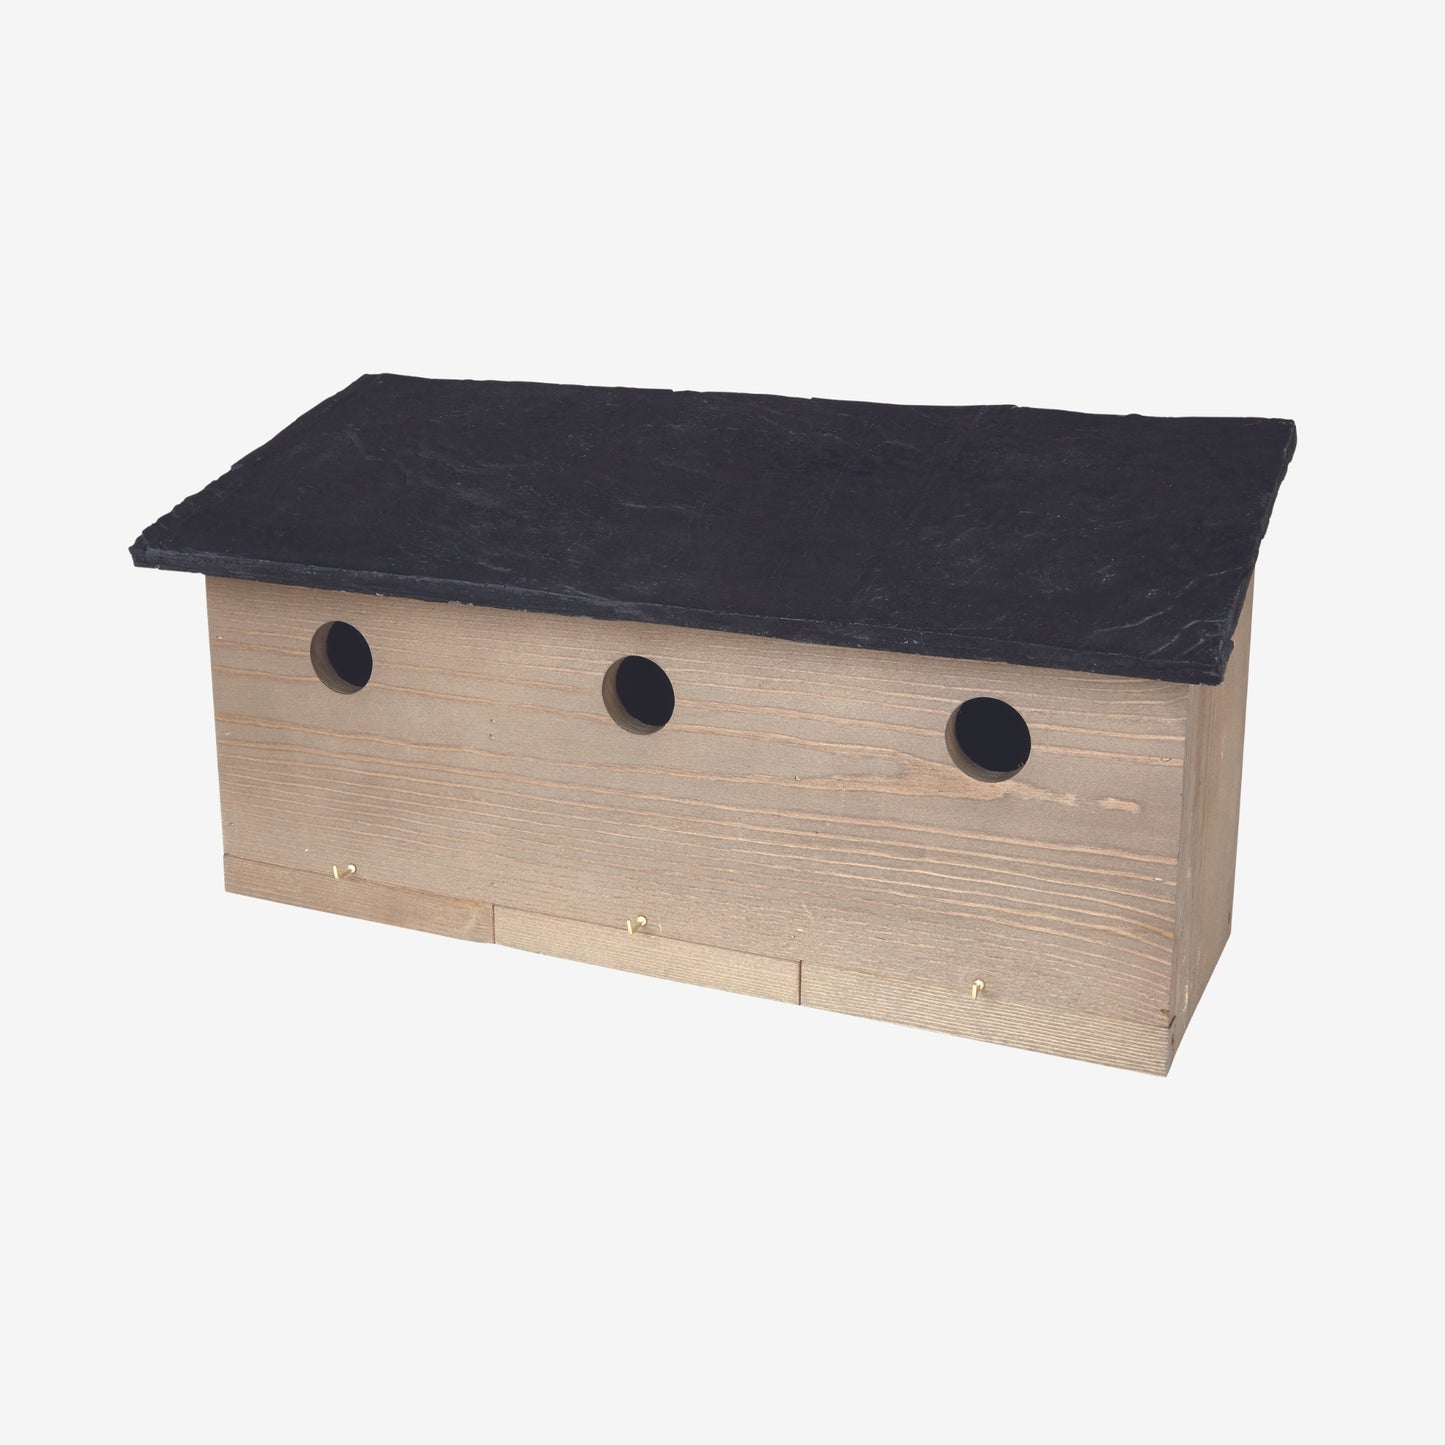 Gardman Sparrow Colony Nest Box